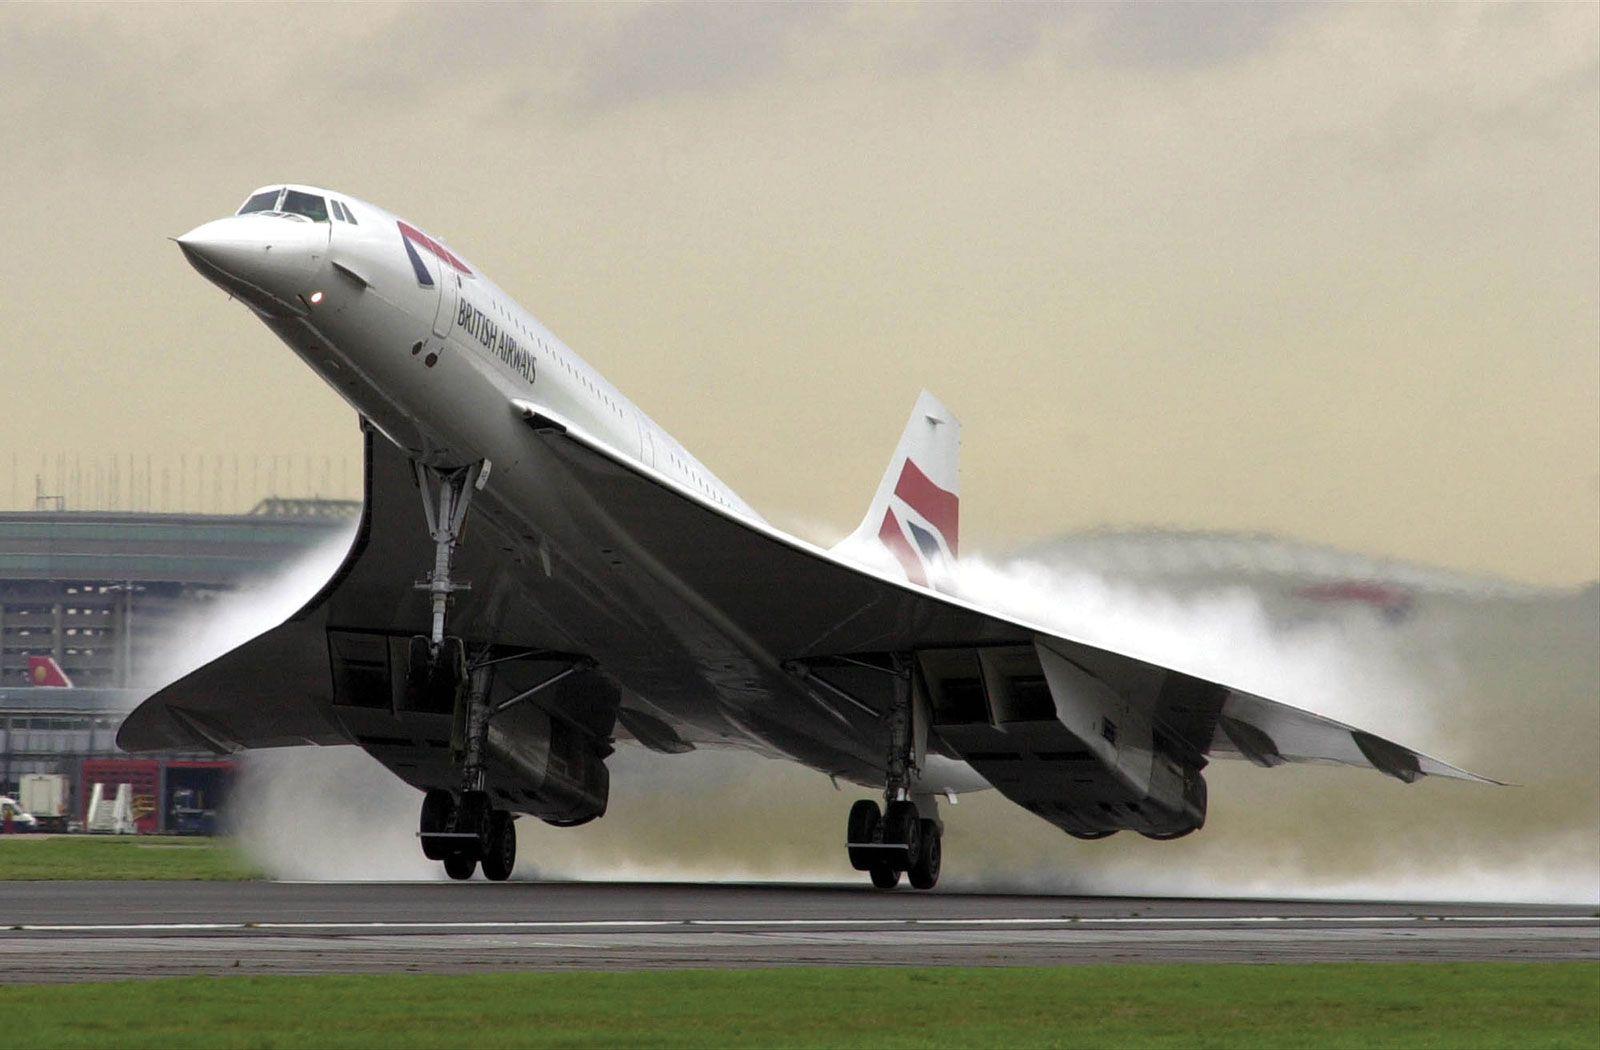 HD Concorde Wallpaper and Photo. HD Planes Wallpaper